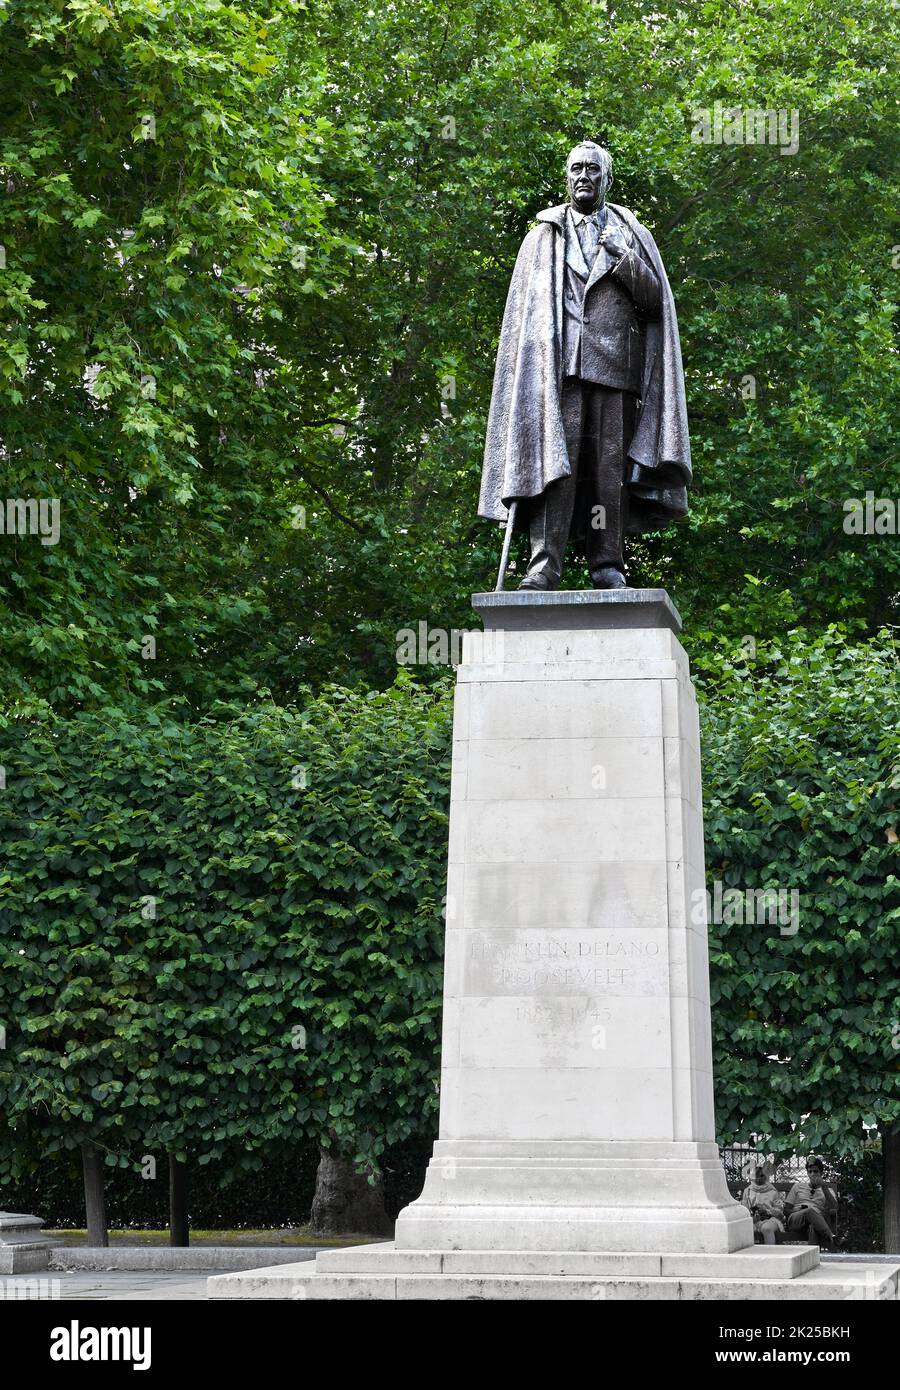 Memorial statue of Franklin D Roosevelt (former president of the USA), Grosvenor Square gardens, Mayfair, London, England. Stock Photo